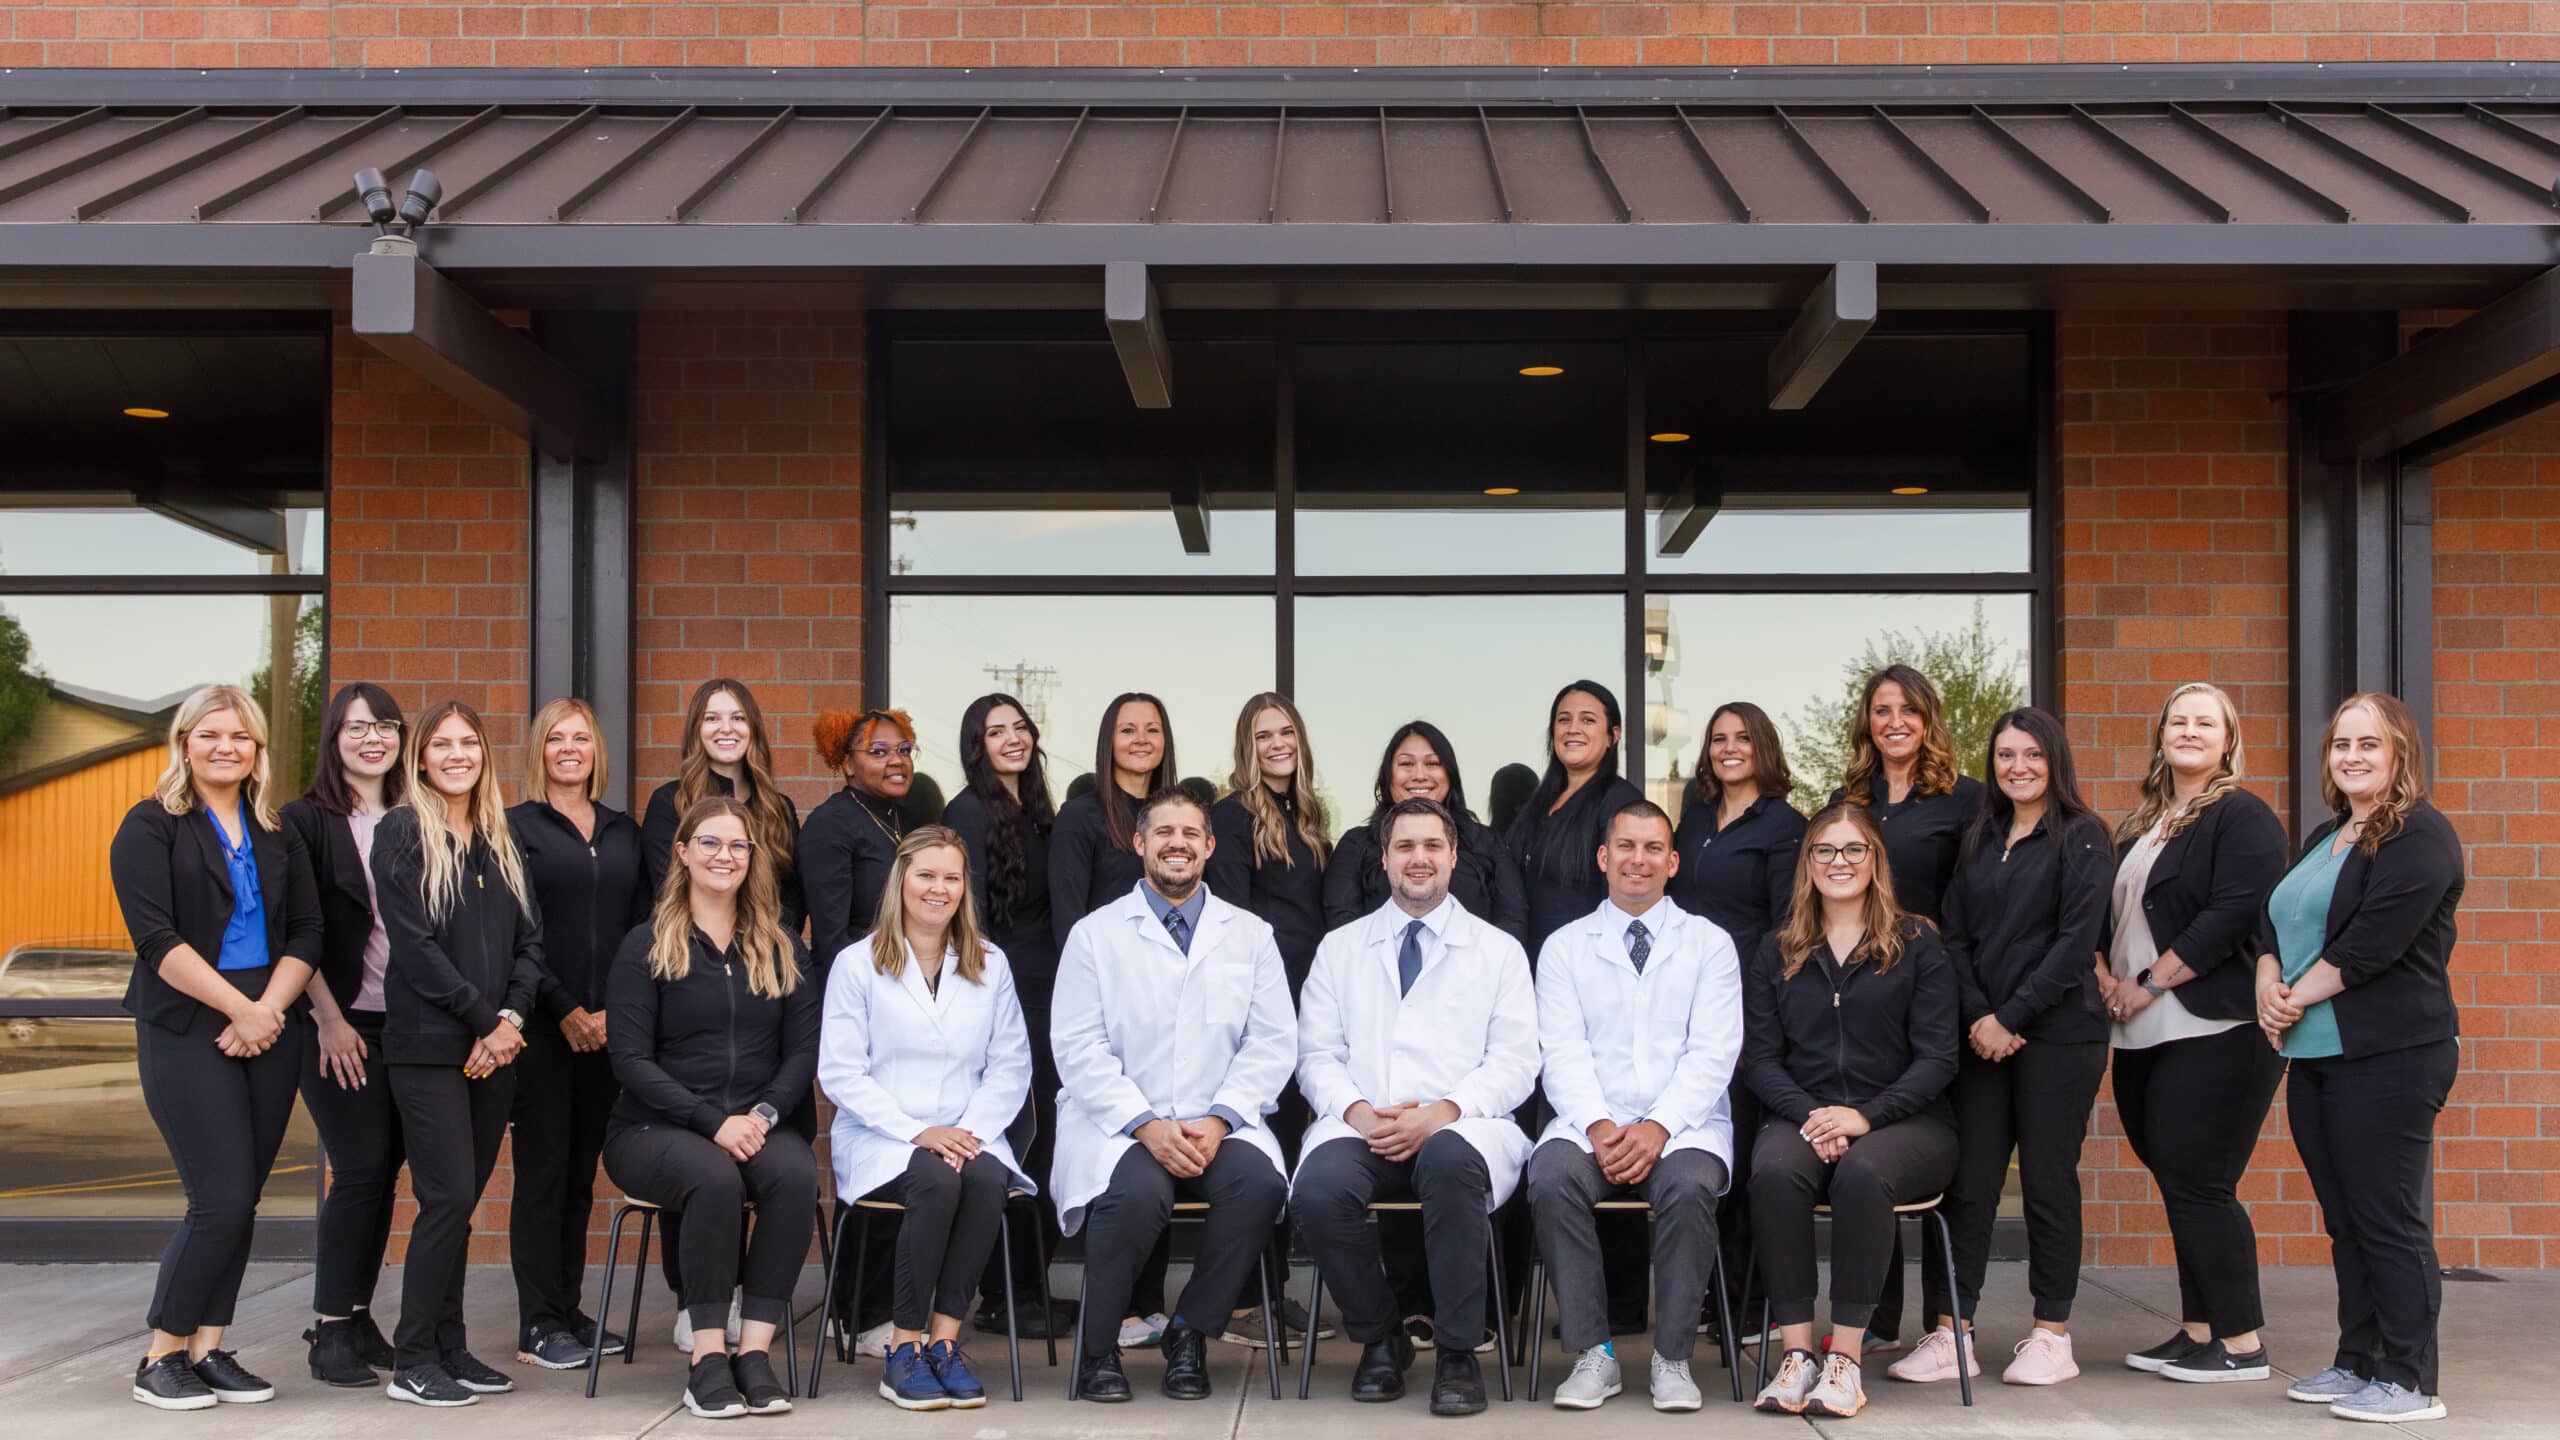 Team Photo of Spokane Family Dental Staff